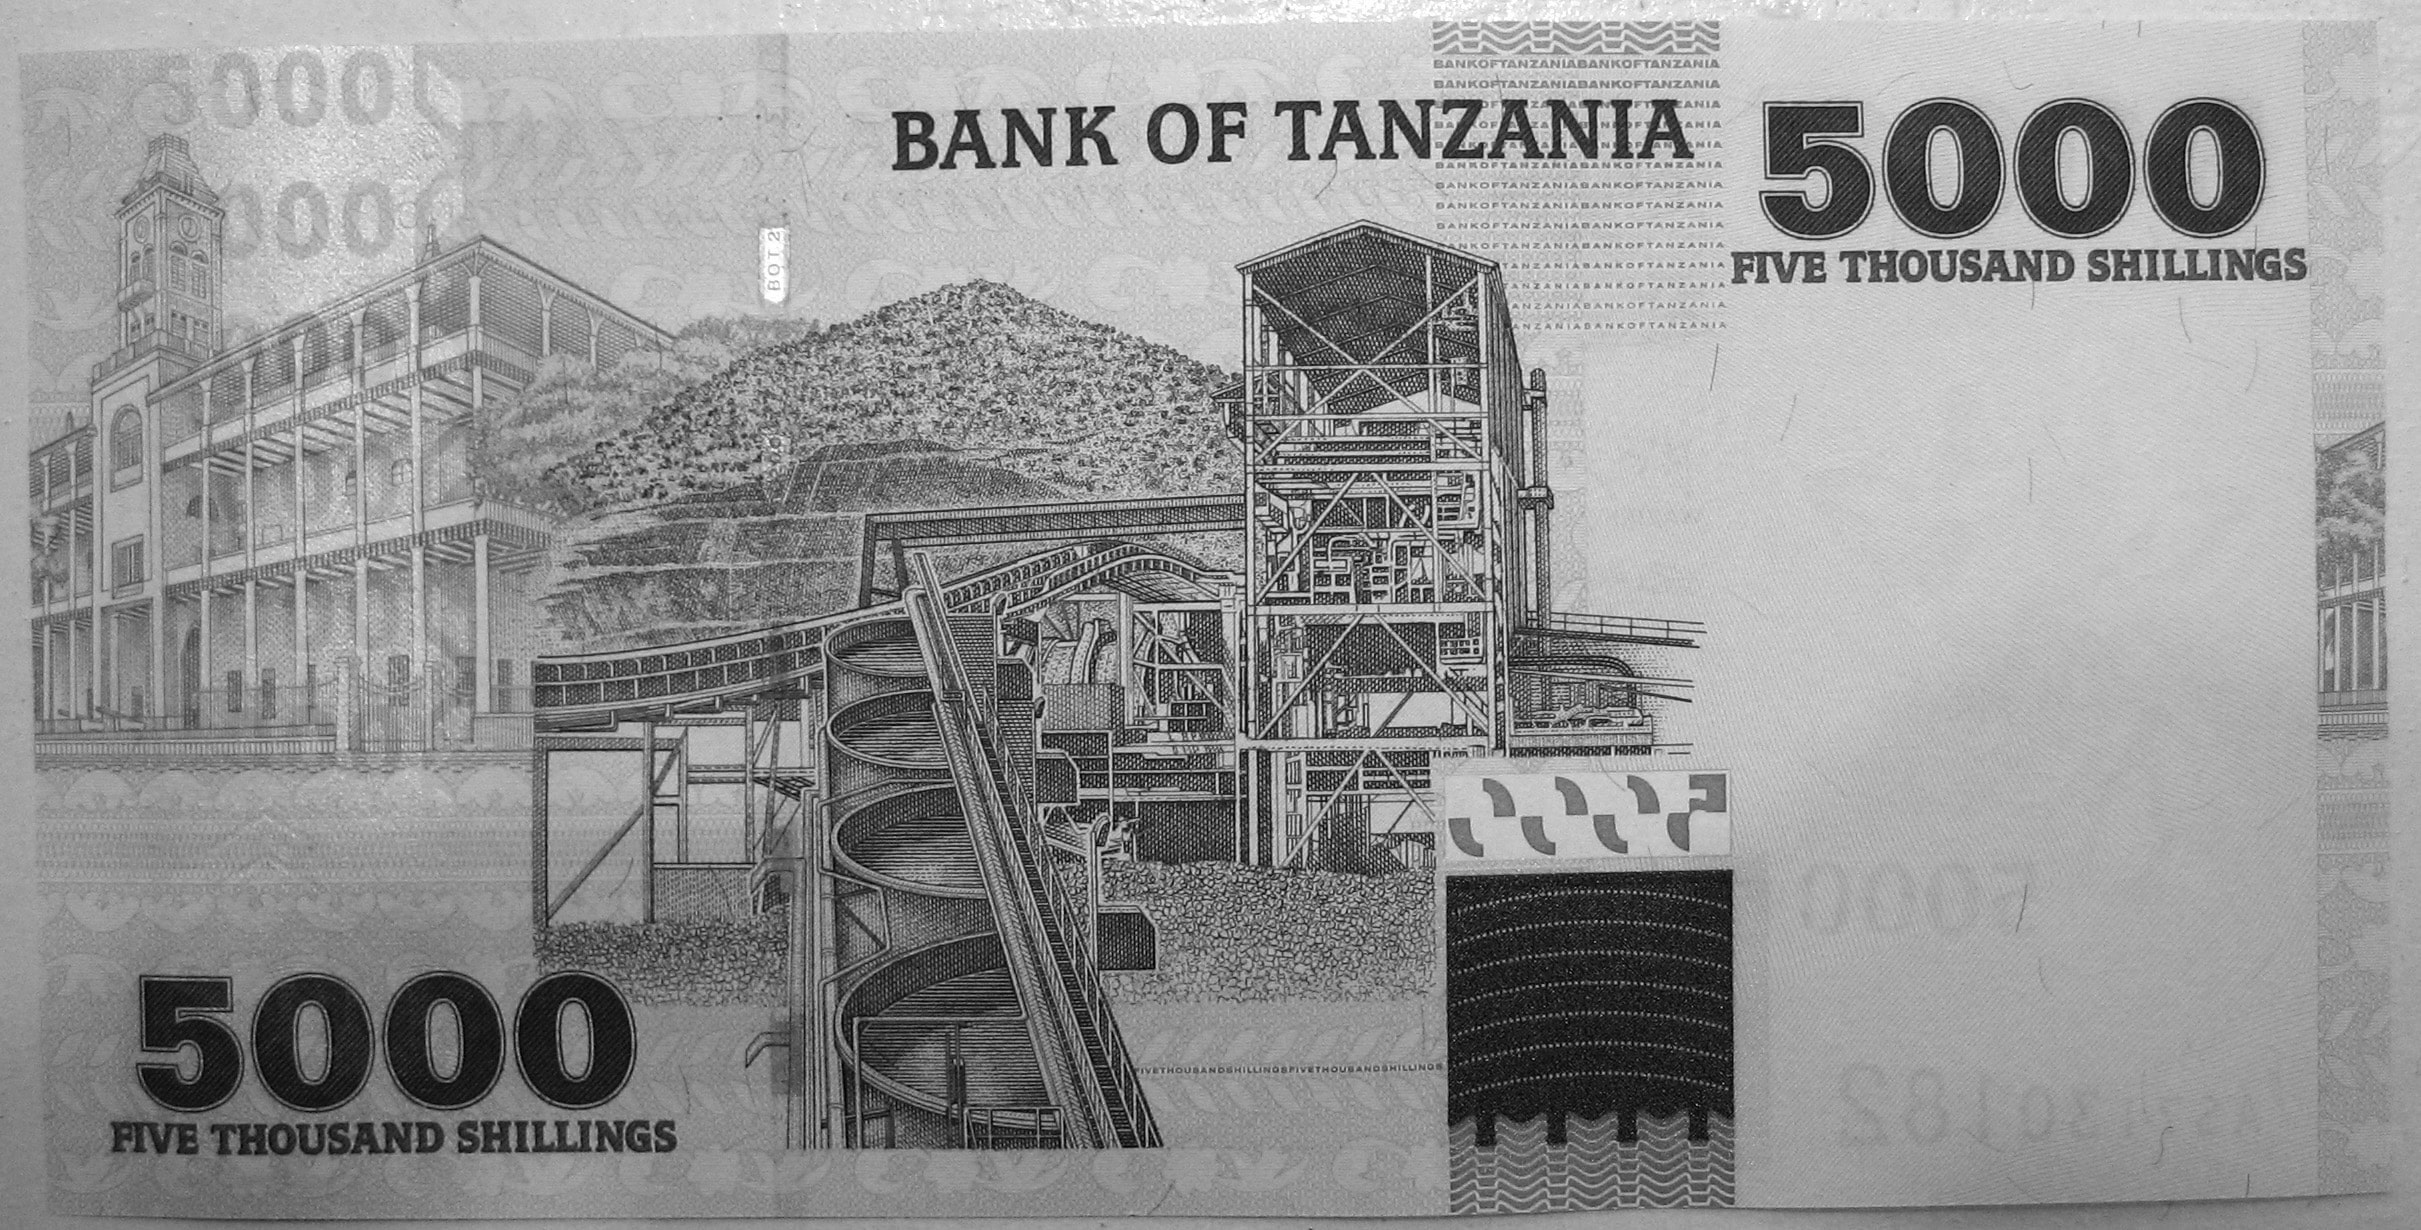 5000 Tanzanian shillings note back